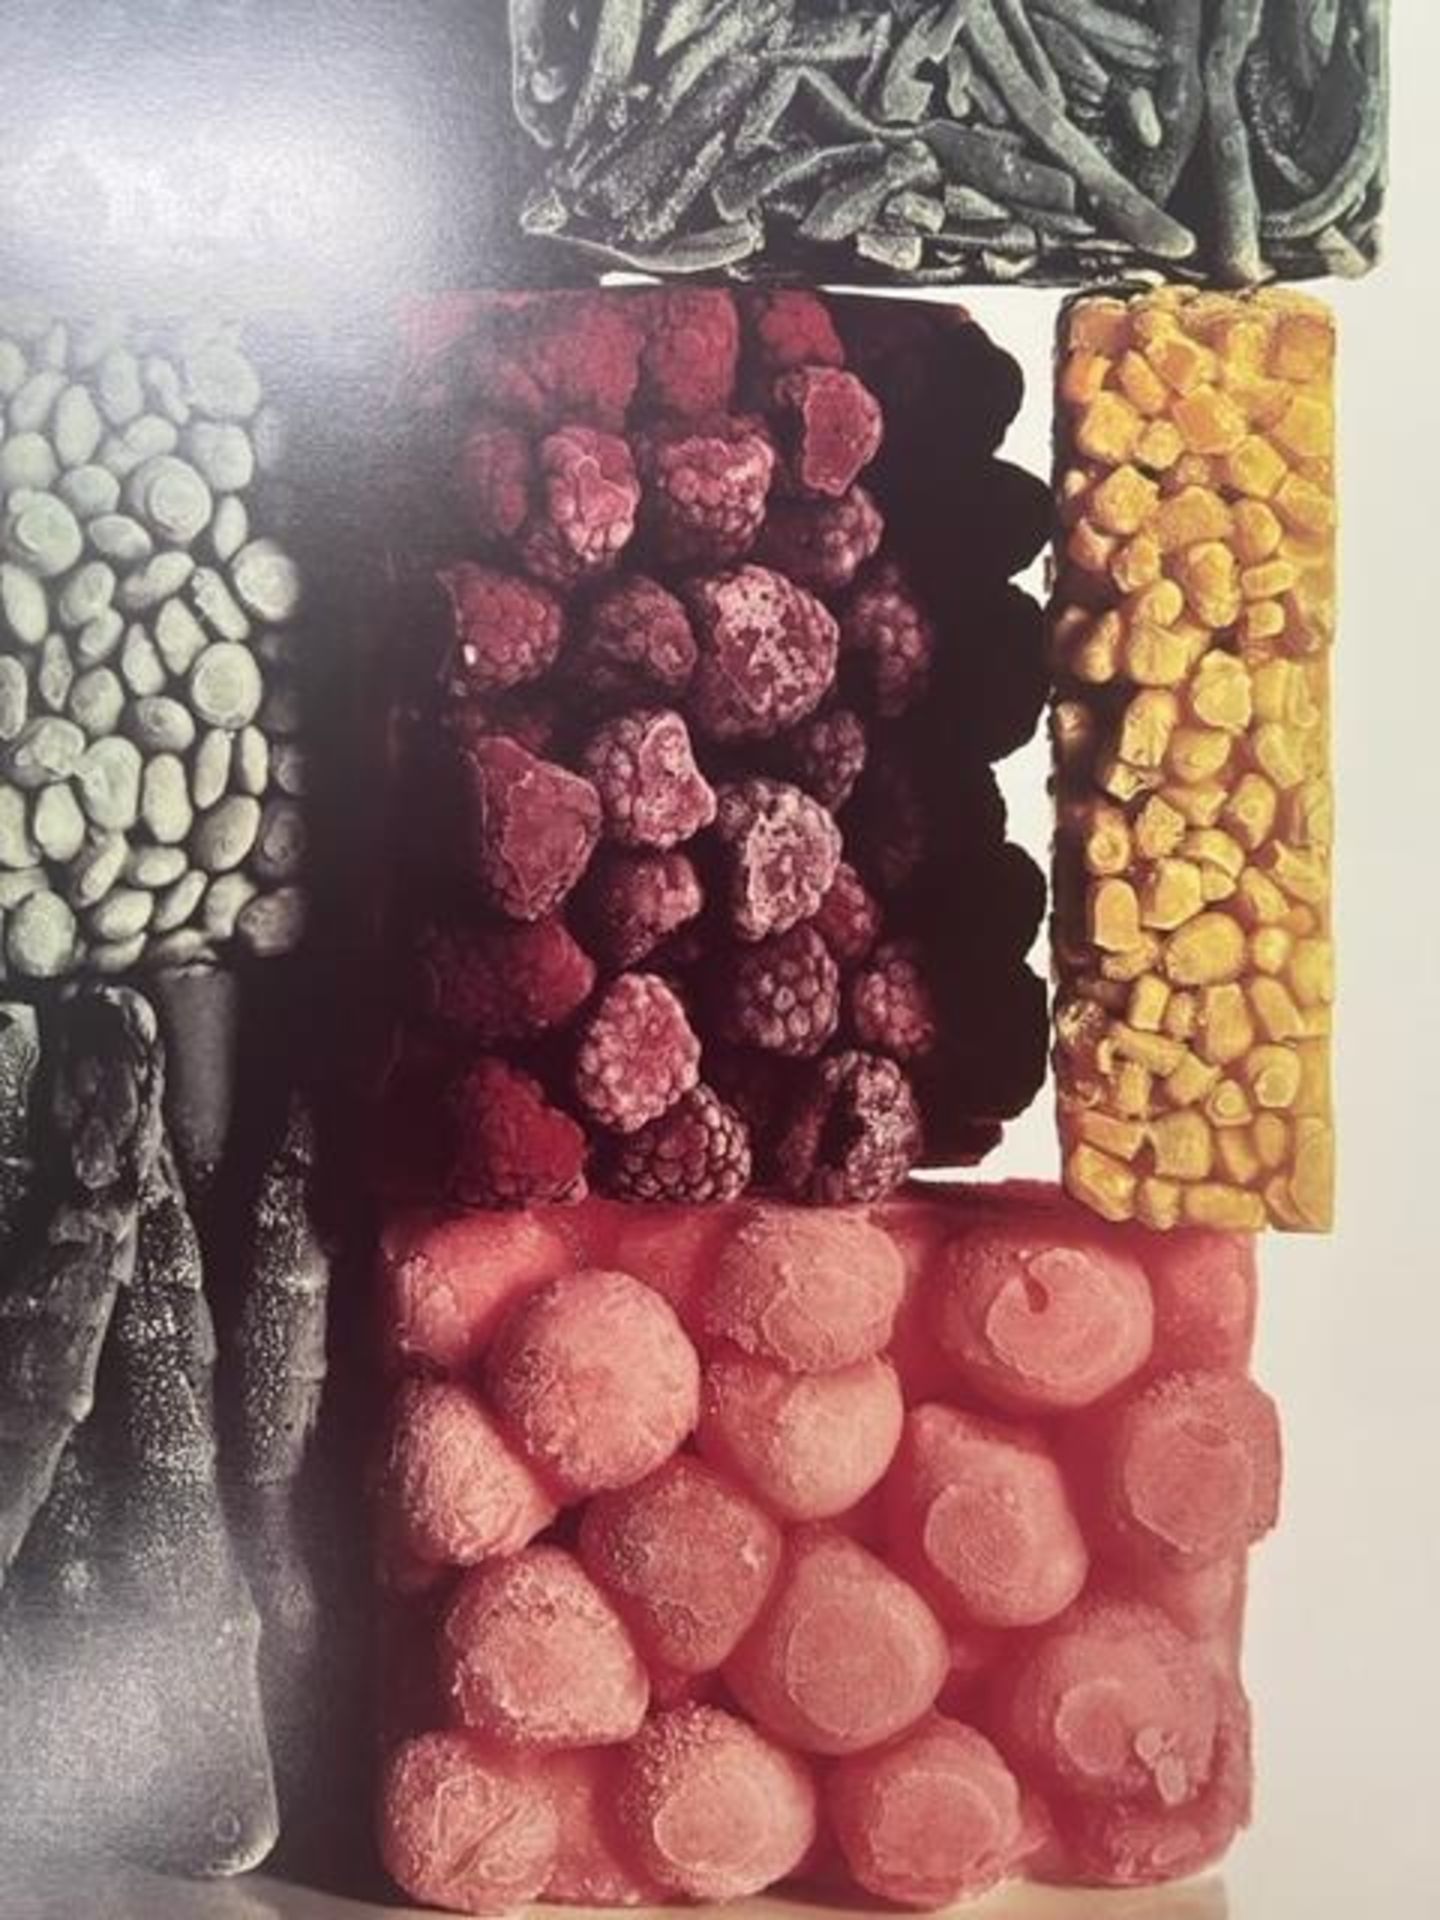 Irving Penn "Frozen Foods" Print. - Image 5 of 6